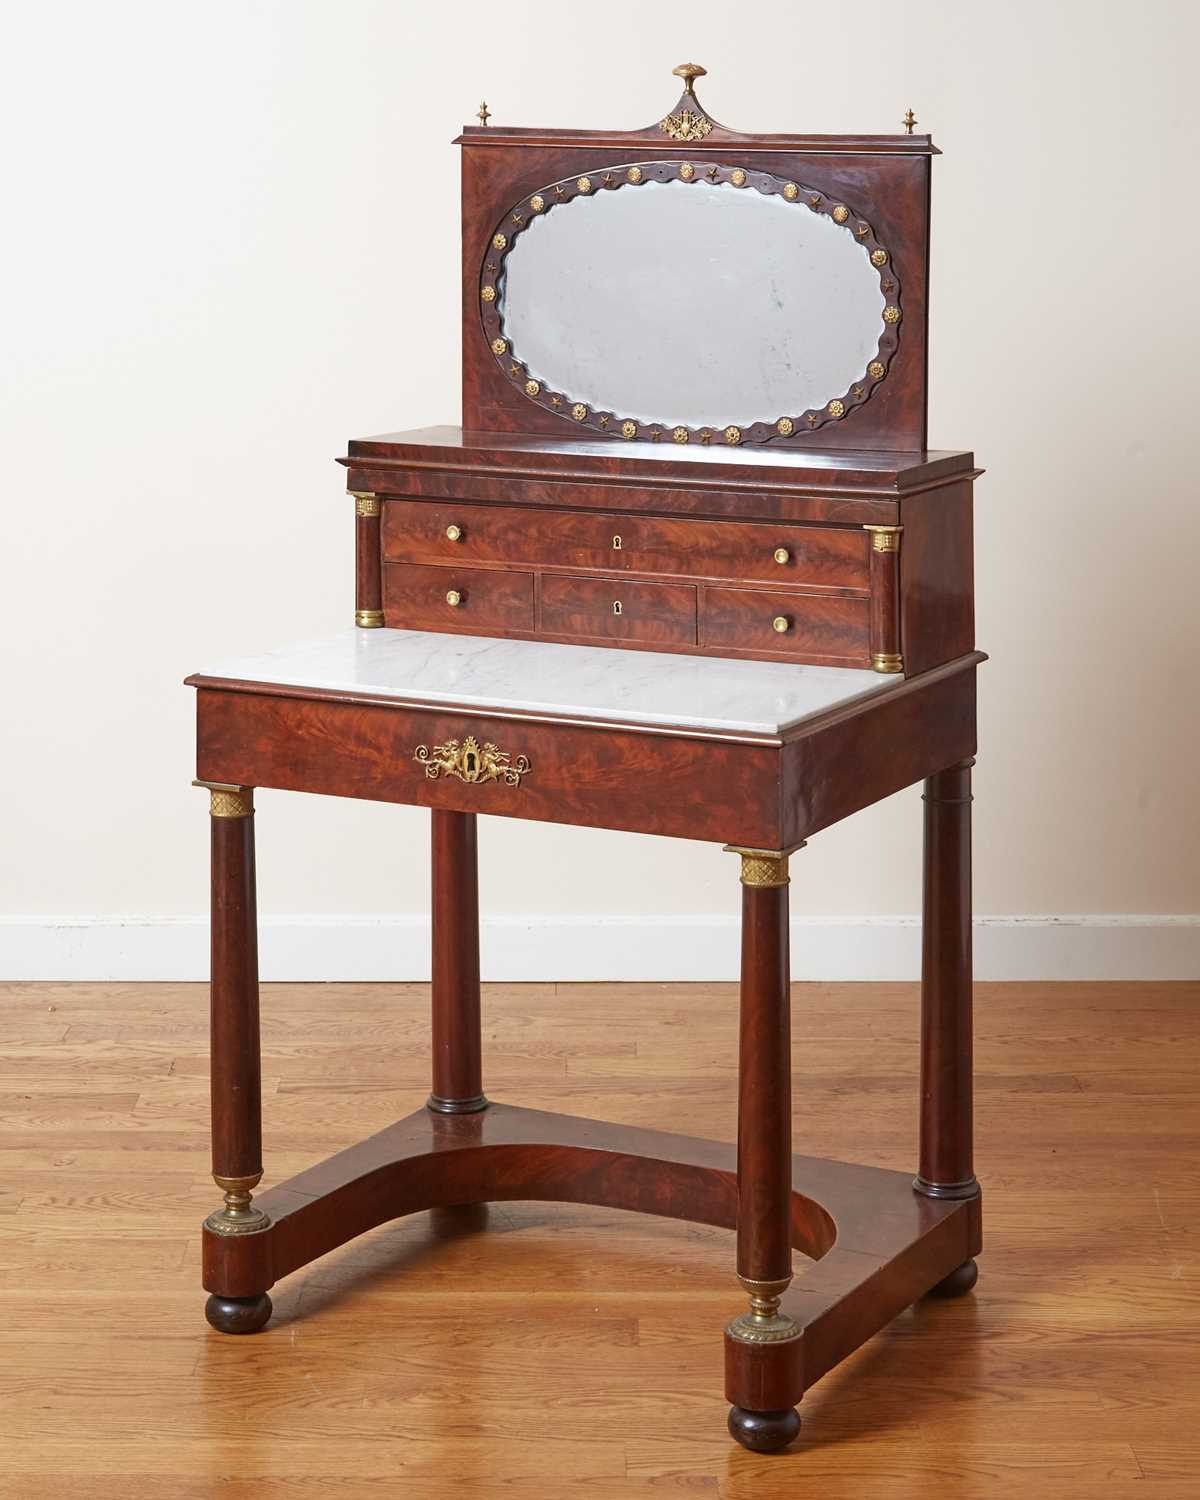 Lot 295 - Empire Gilt-Bronze Mounted Mahogany Lady's Desk / Makeup Table